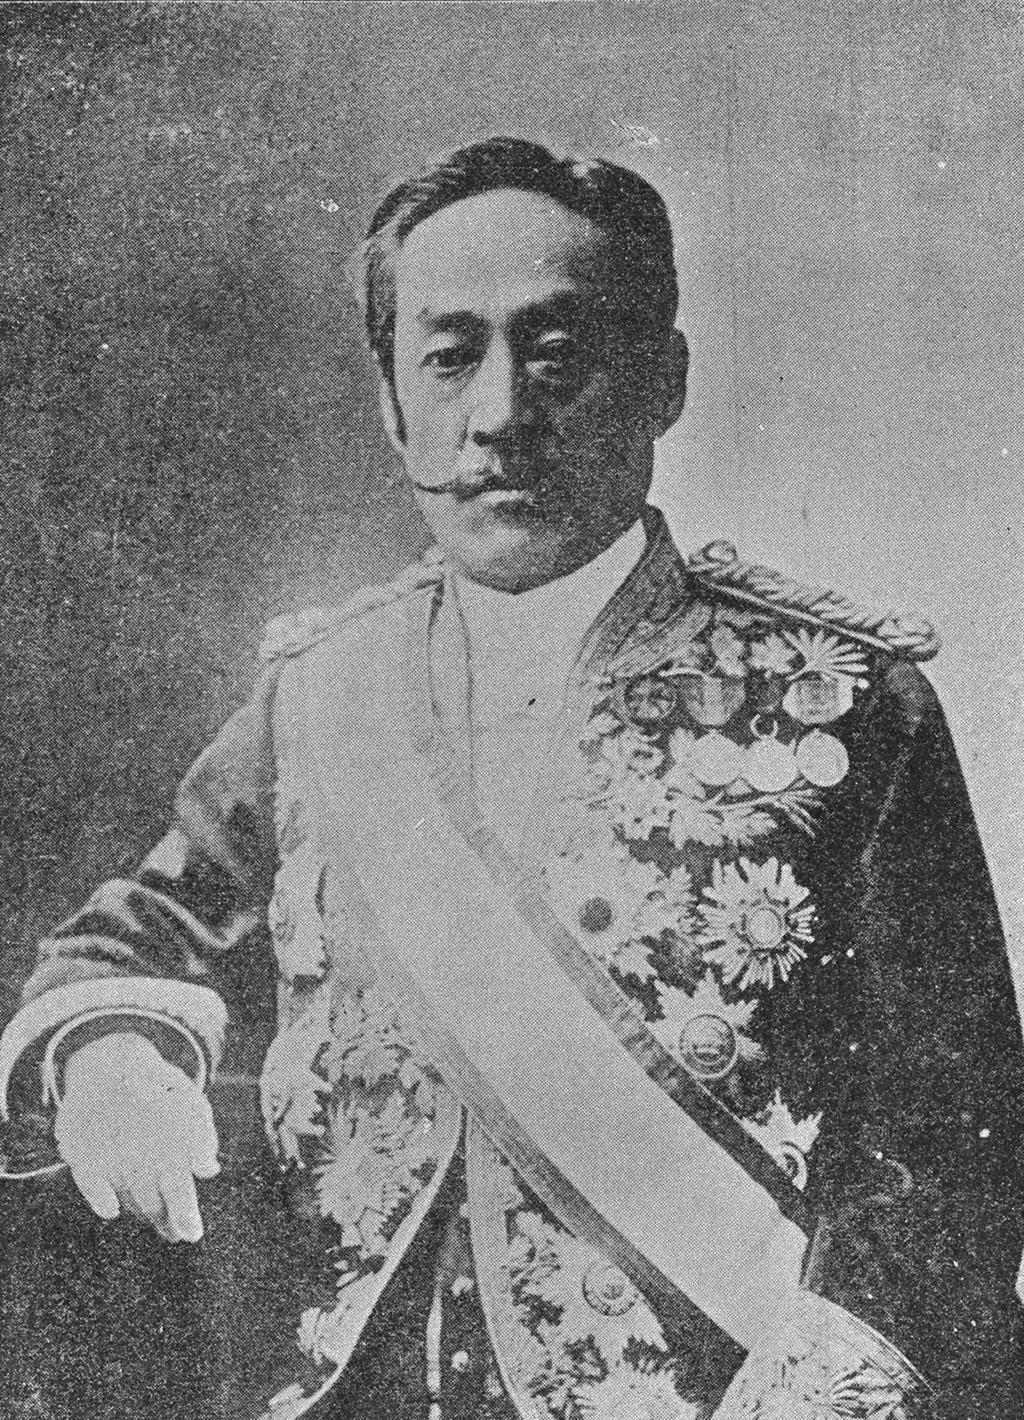 Portrait of IWAKURA Tomosada1